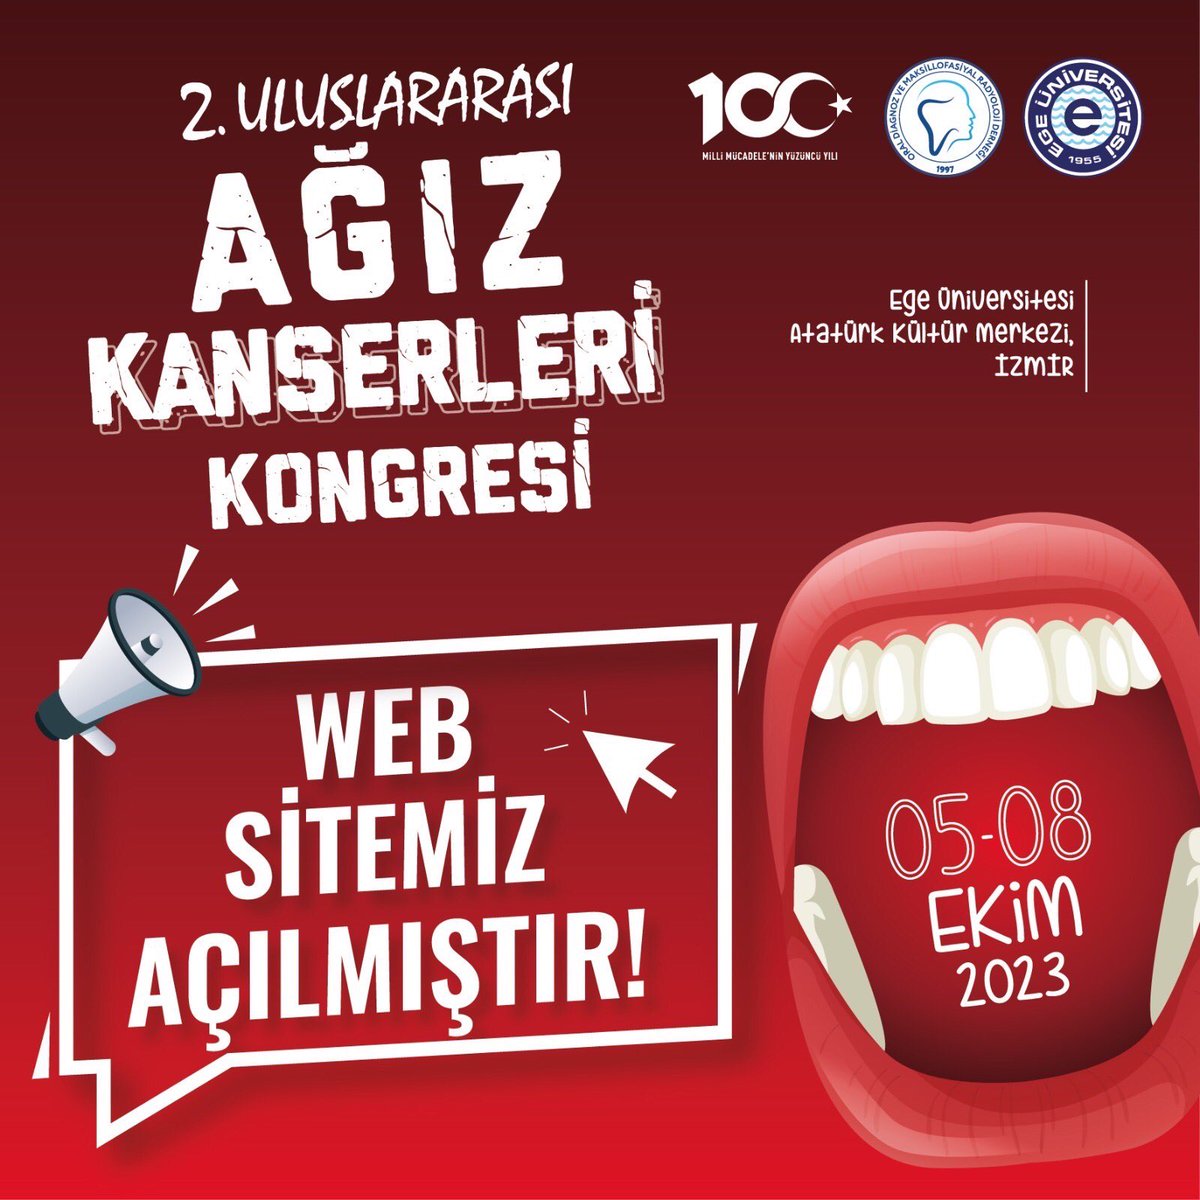 International Congress of Oral Cancer 2023